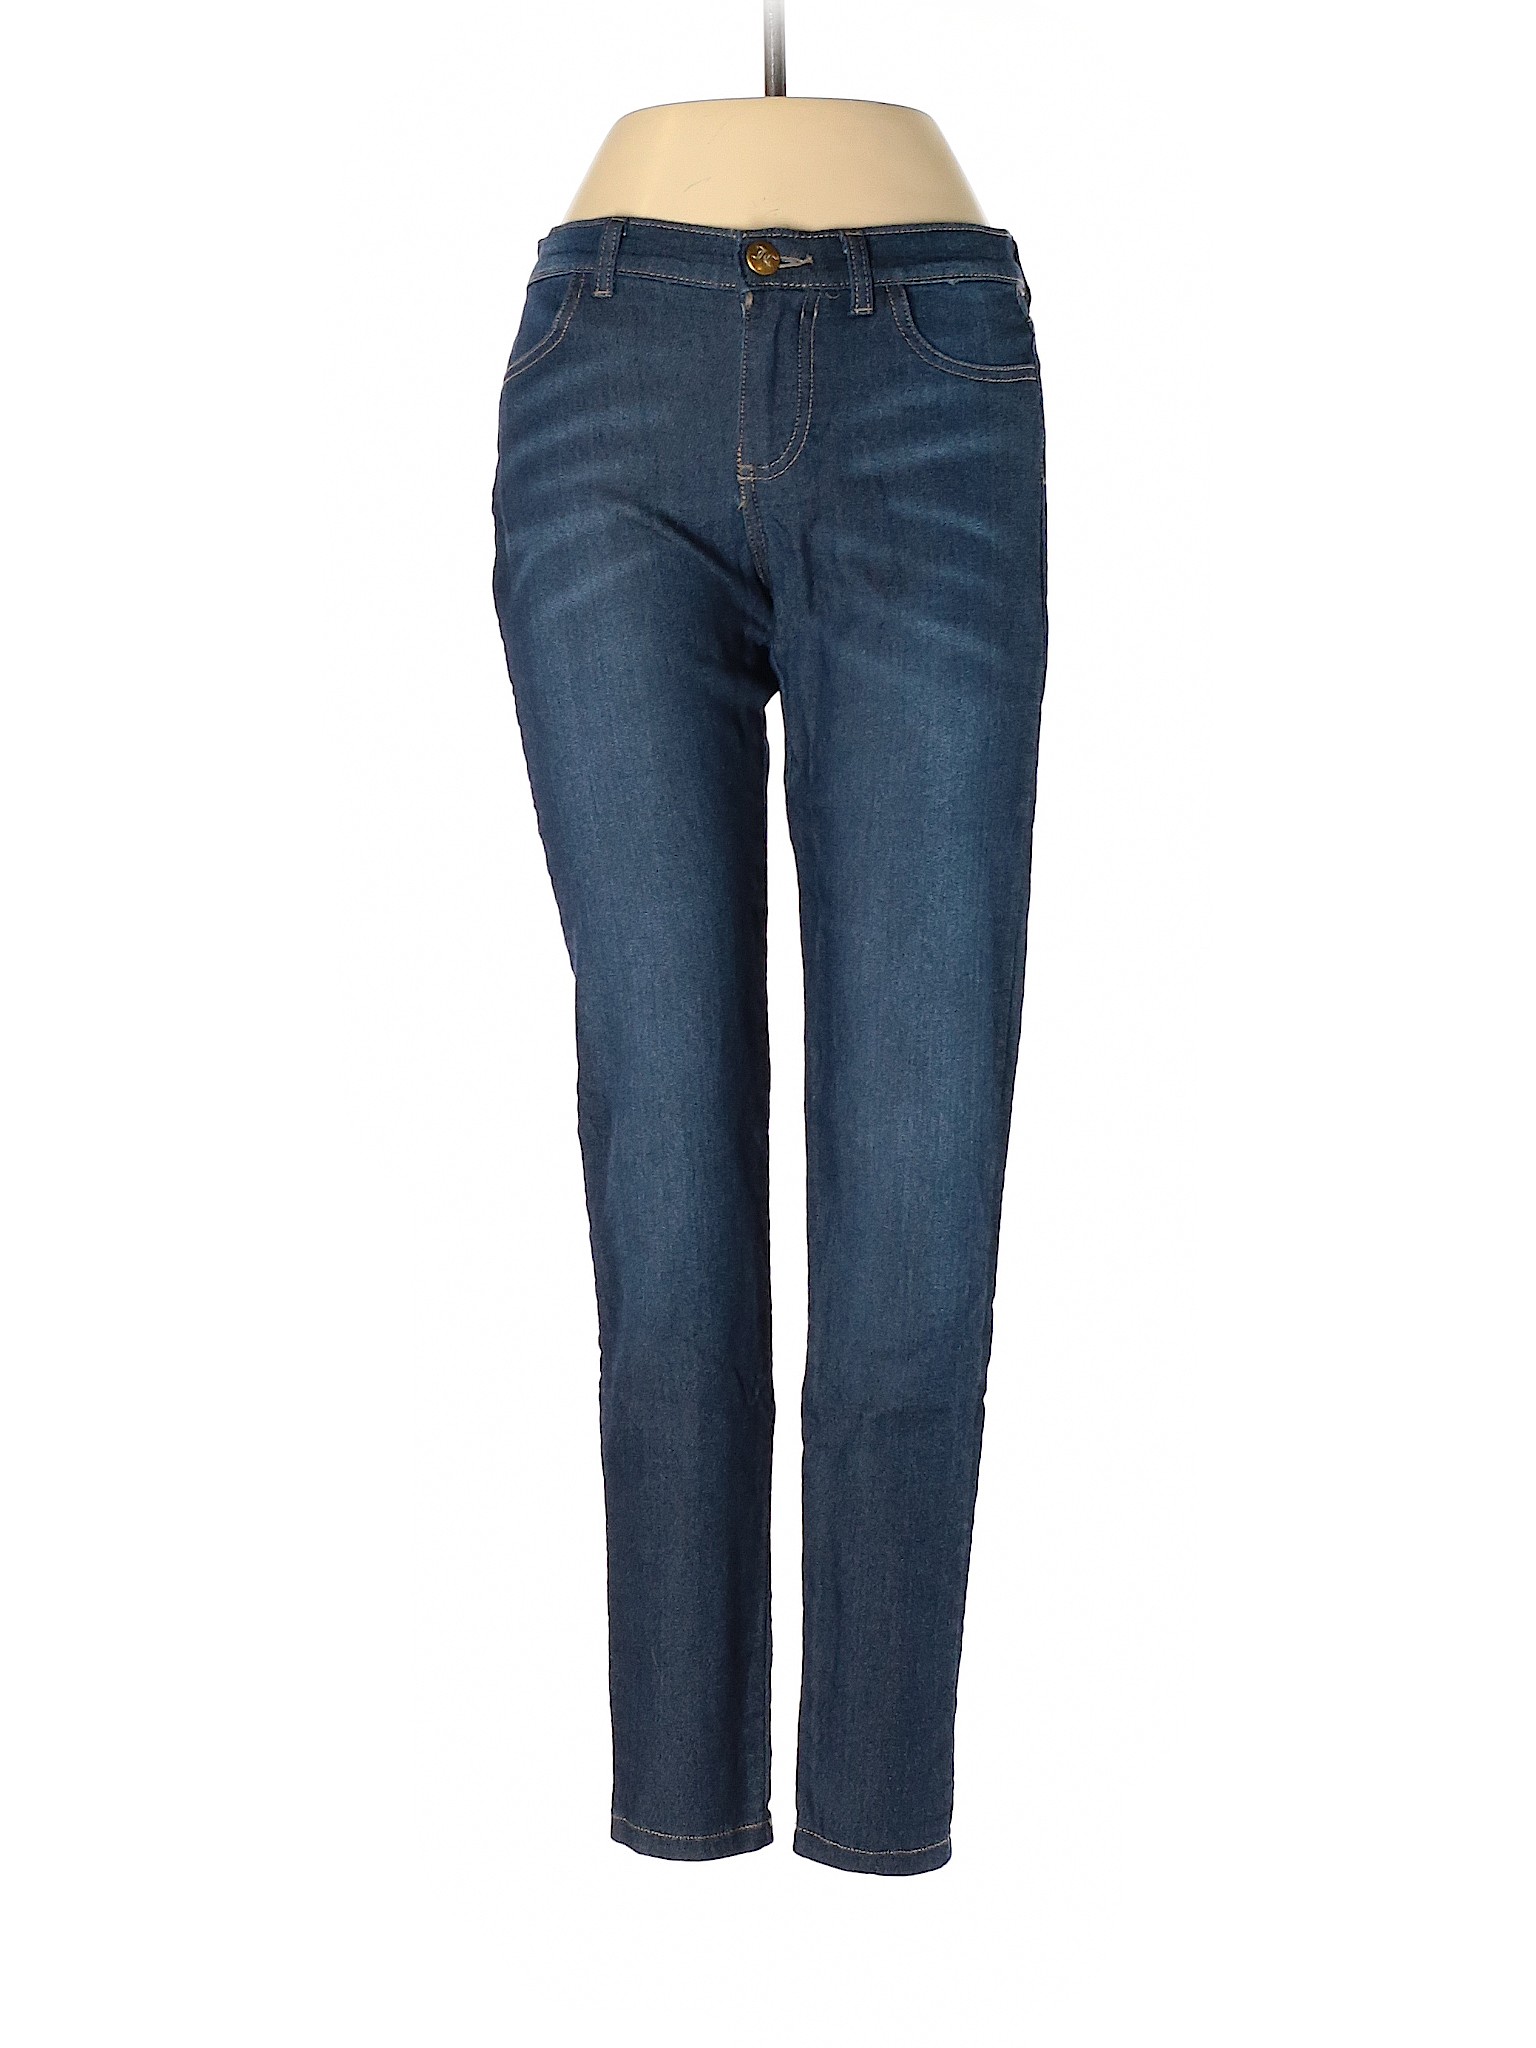 Juicy Couture Women Blue Jeans 0 | eBay